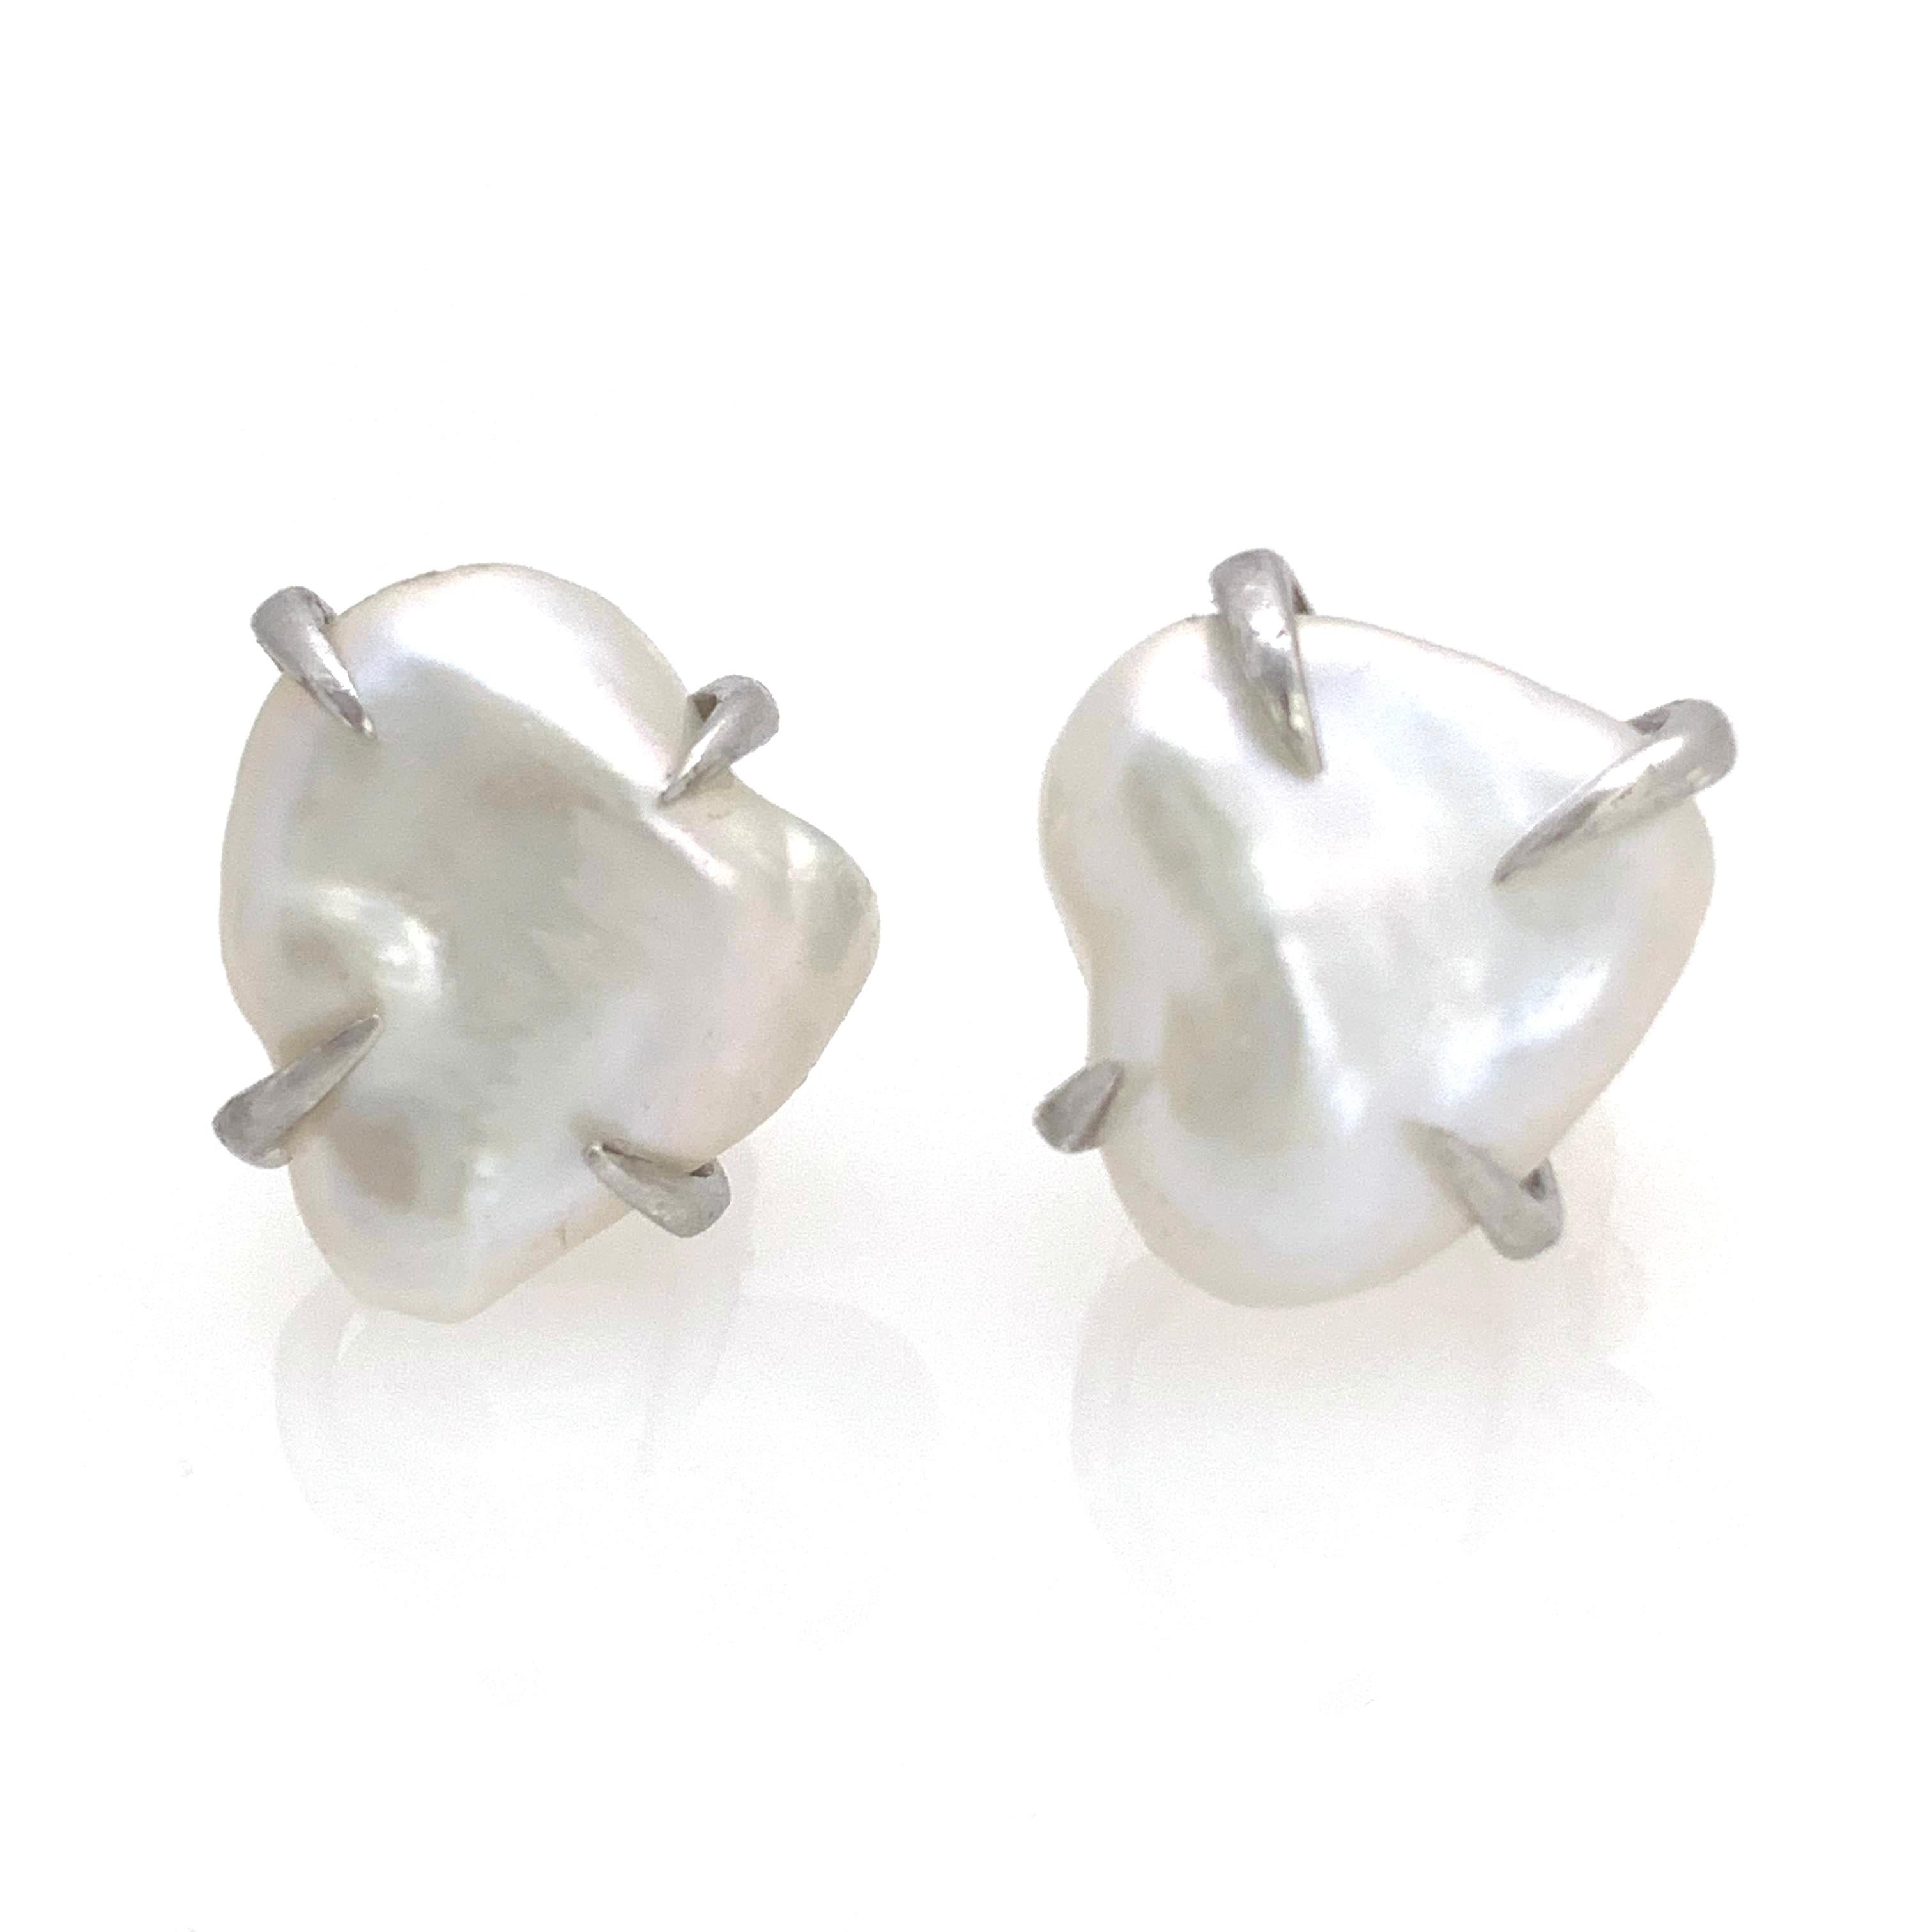 Modern Lustrous Pair of 13mm White Baroque Pearl Stud Earrings